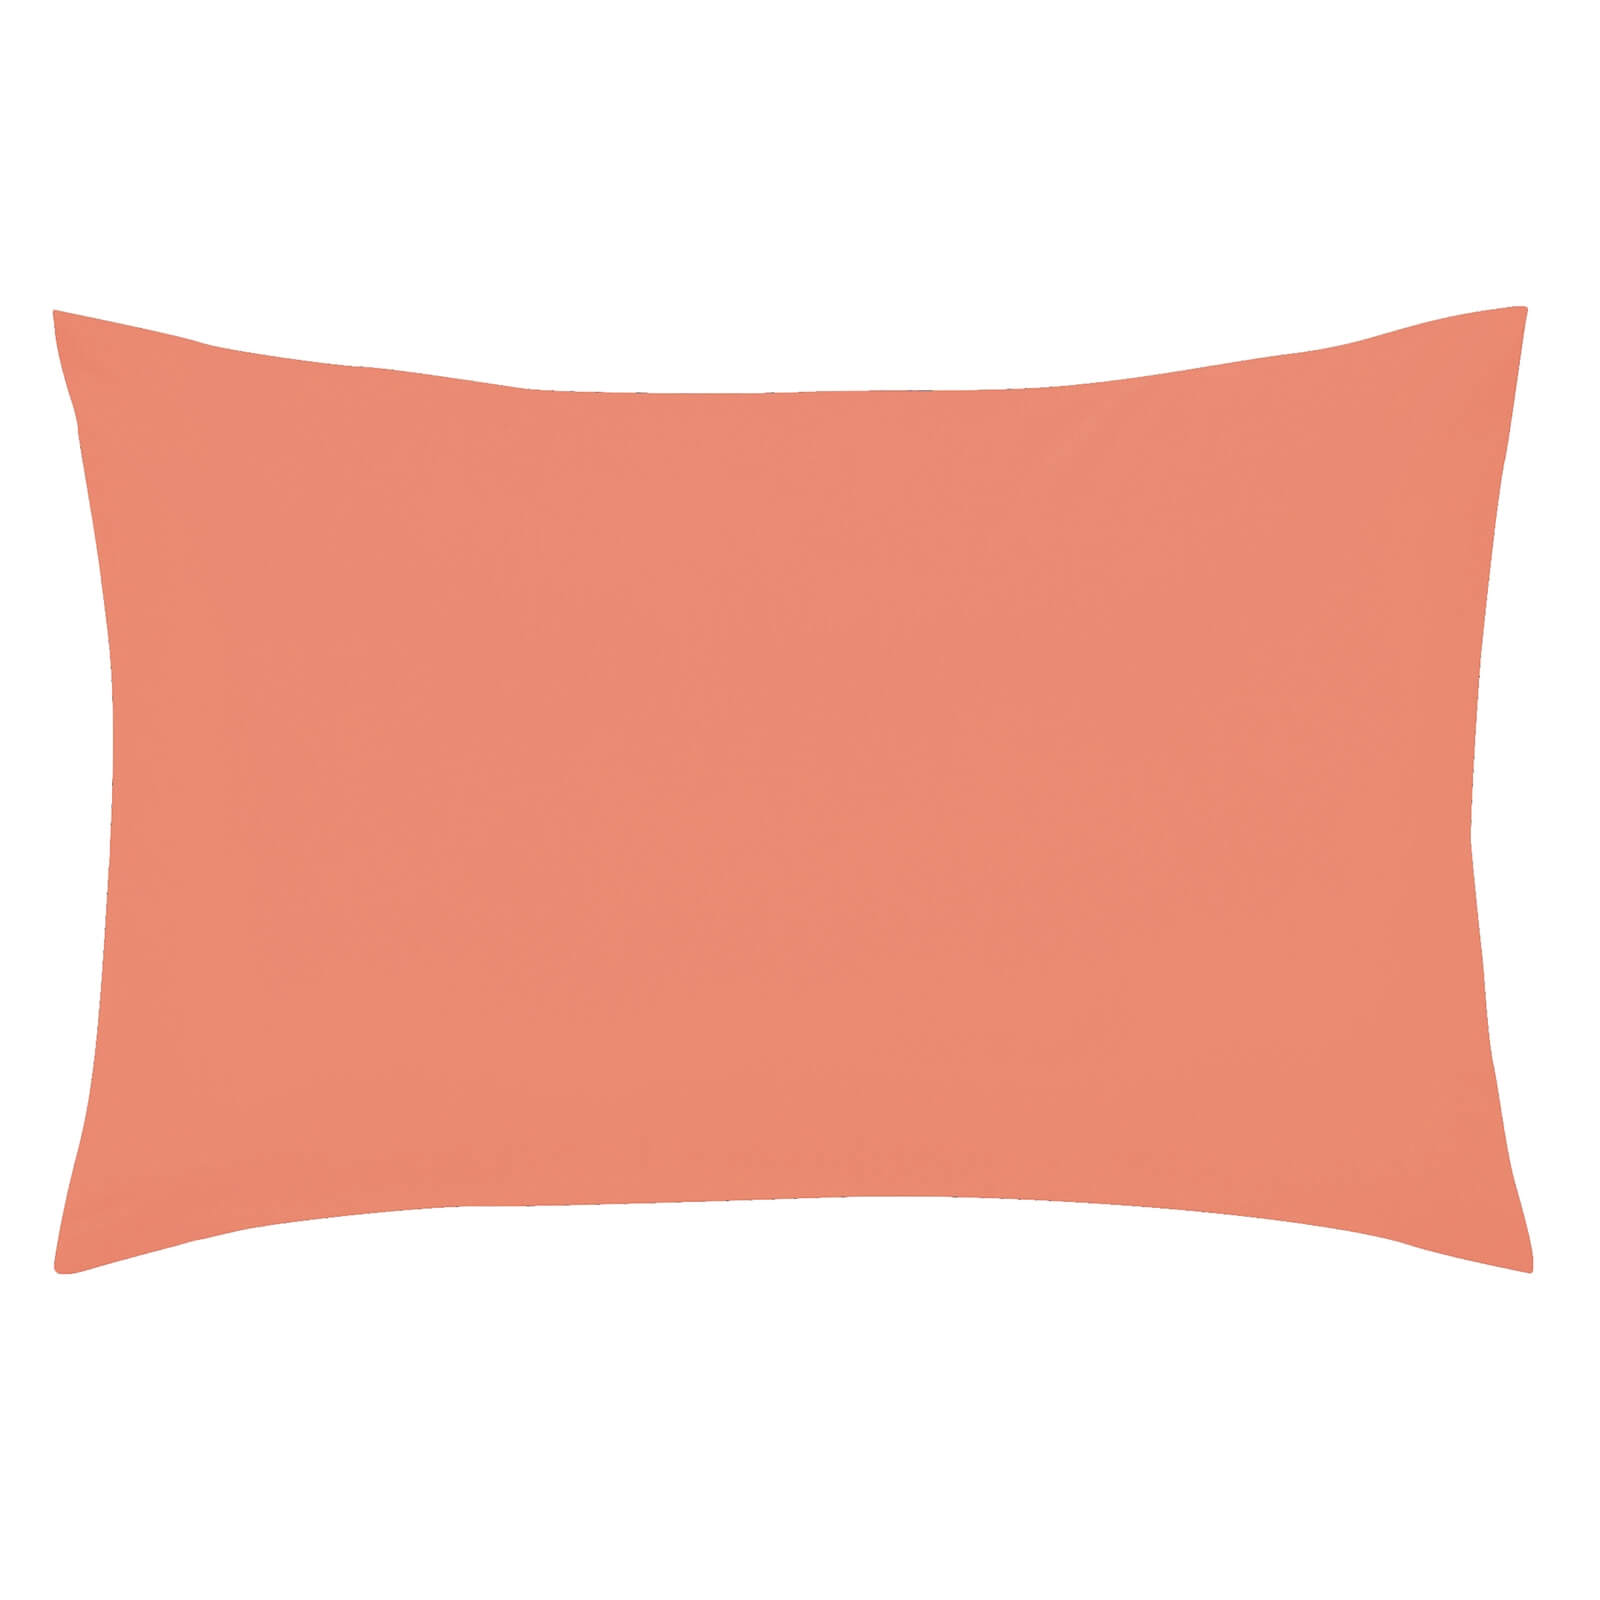 Helena Springfield Copenhagen Plain Dye Pillowcase Standard - Coral